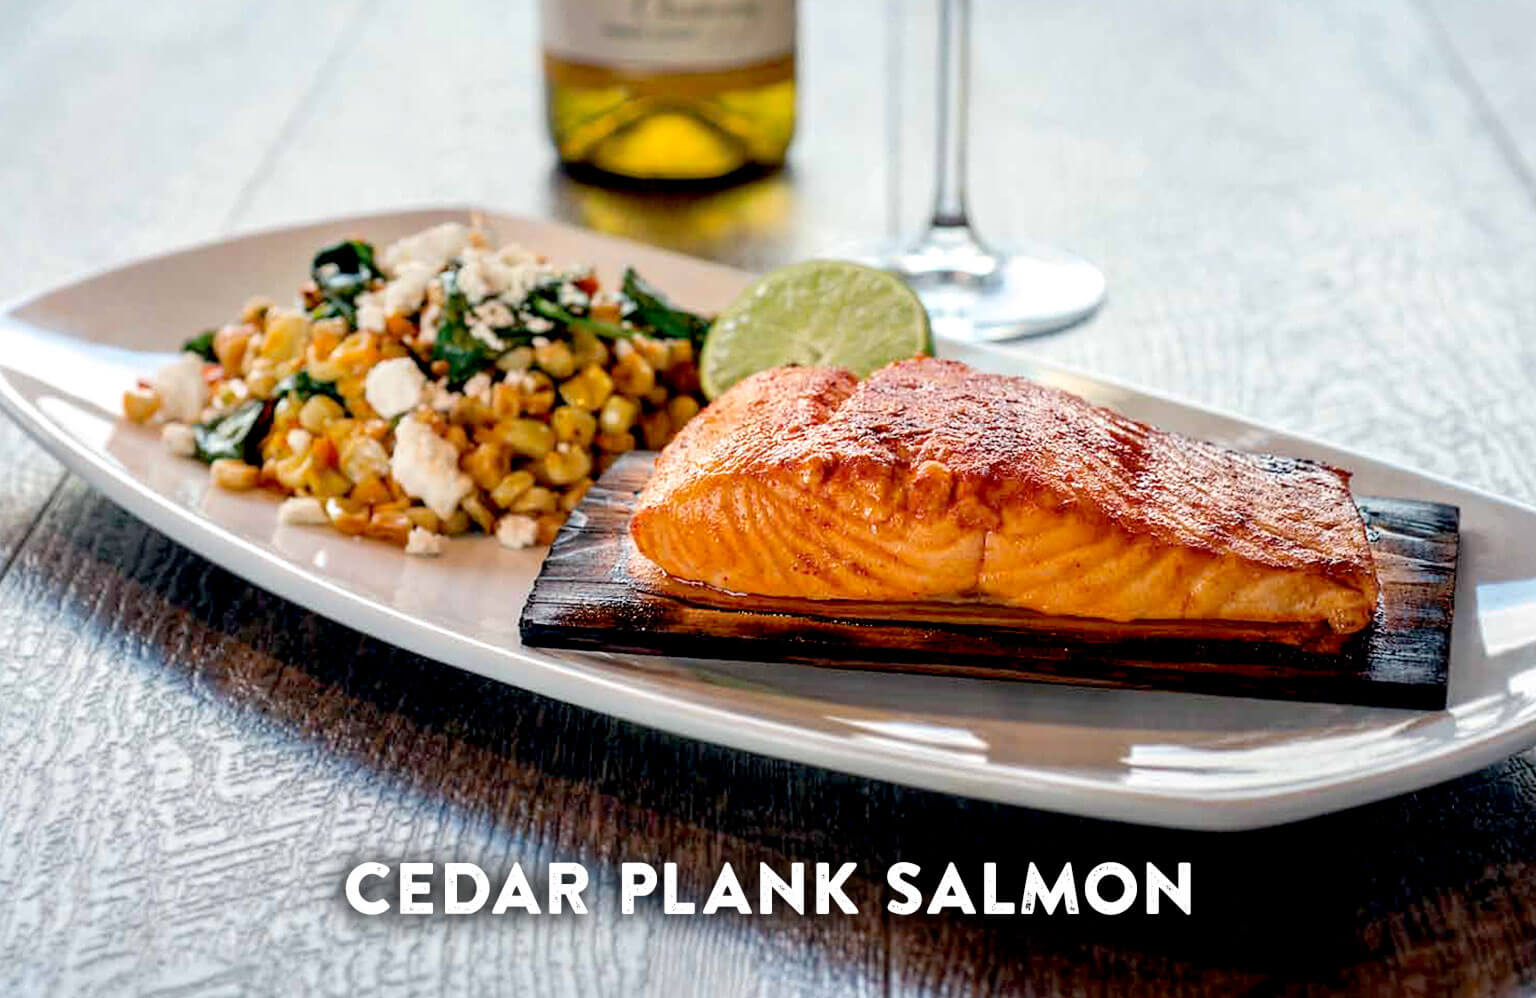 Cedar Plank Salmon - シダープランクサーモン